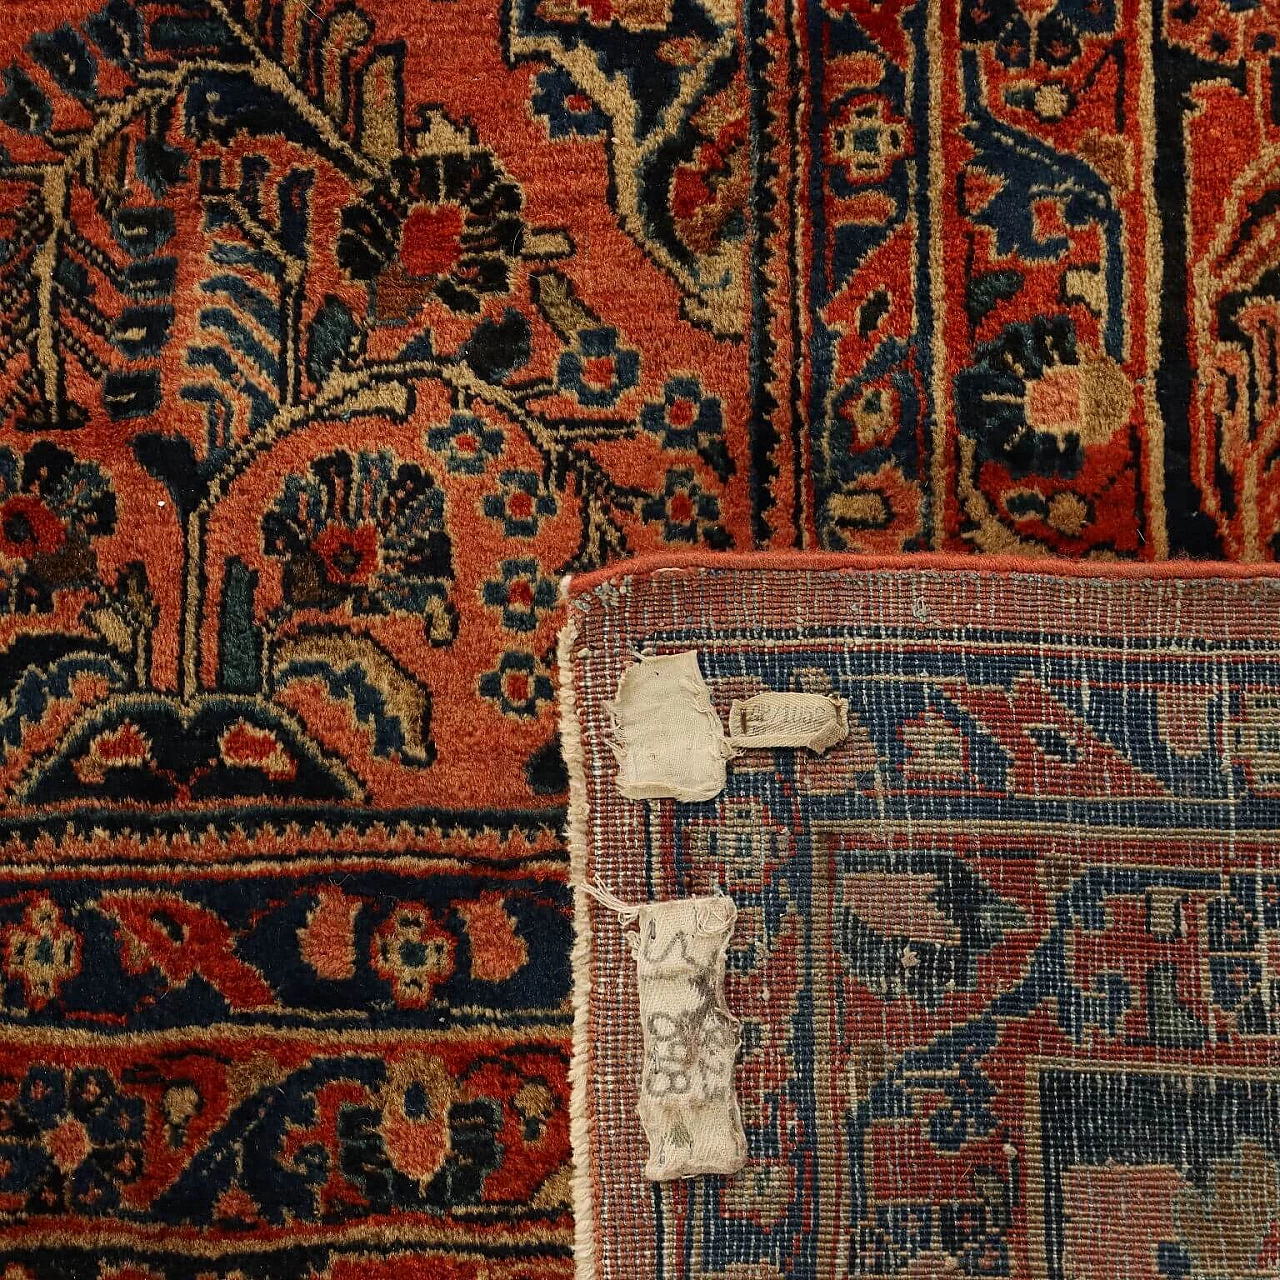 Iranian Saruk American cotton and wool carpet 10